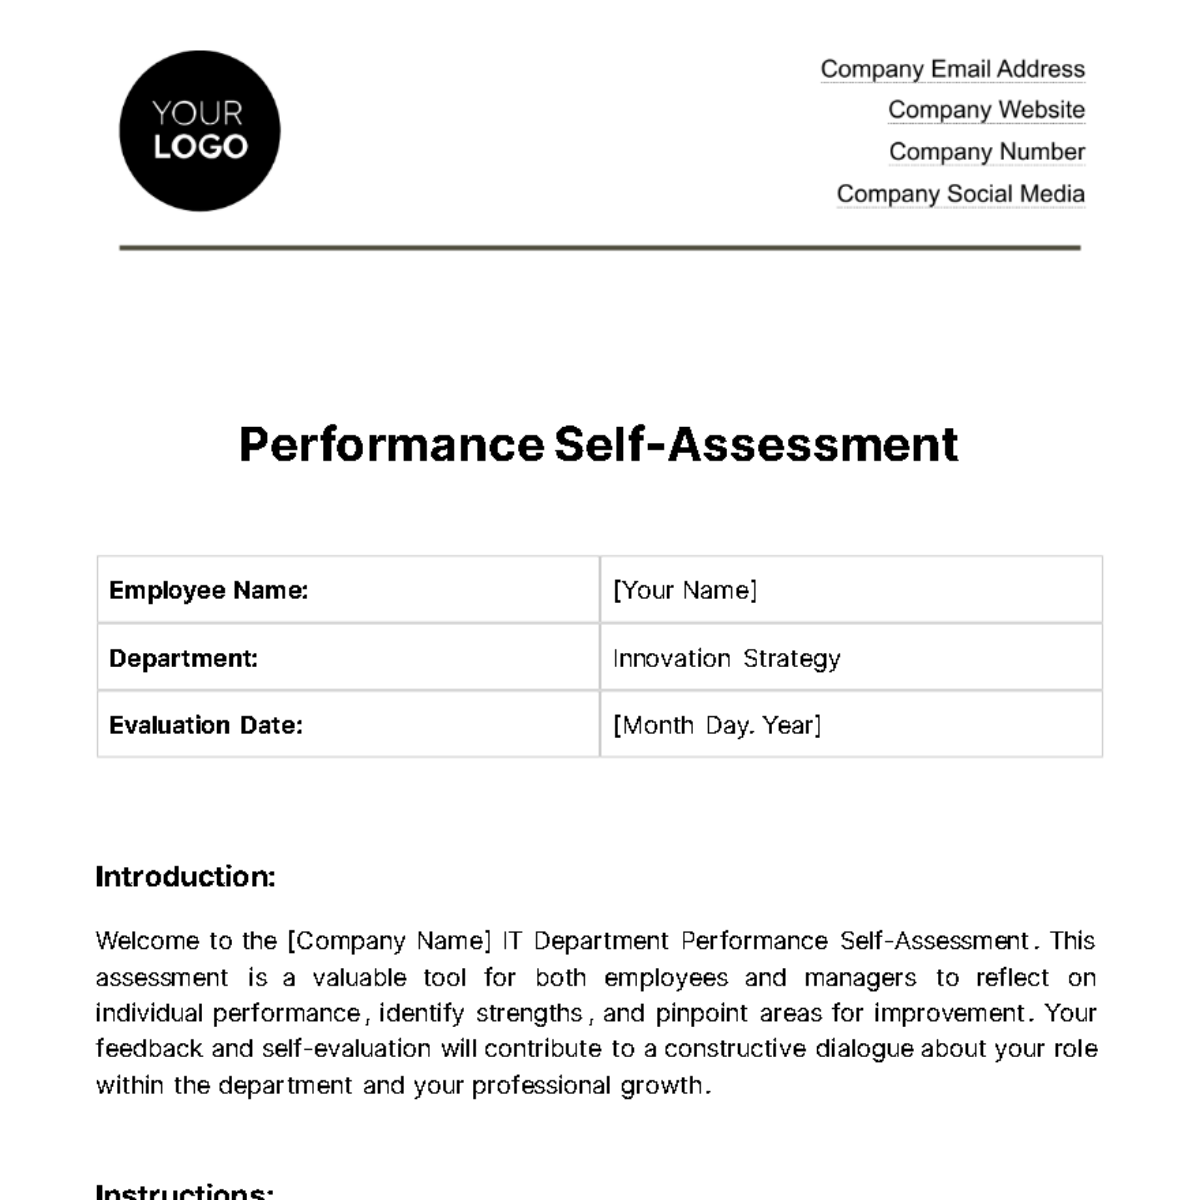 Performance Self-Assessment HR Template